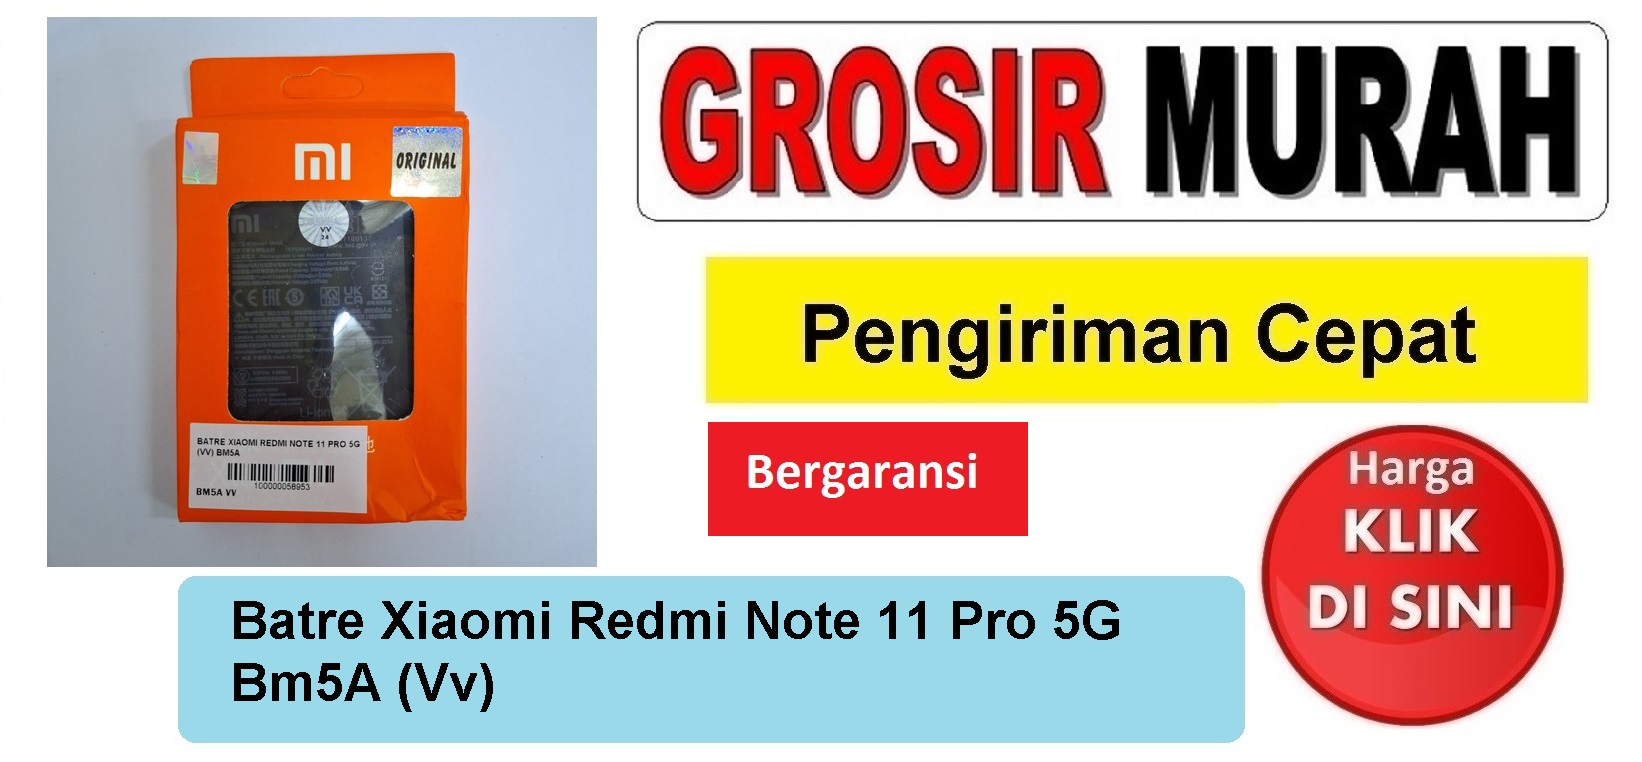 Pusat Penjualan Batre Xiaomi Redmi Note 11 Pro 5G Bm5A (Vv) Baterai Battery Bergaransi Batere Spare Part Hp Grosir